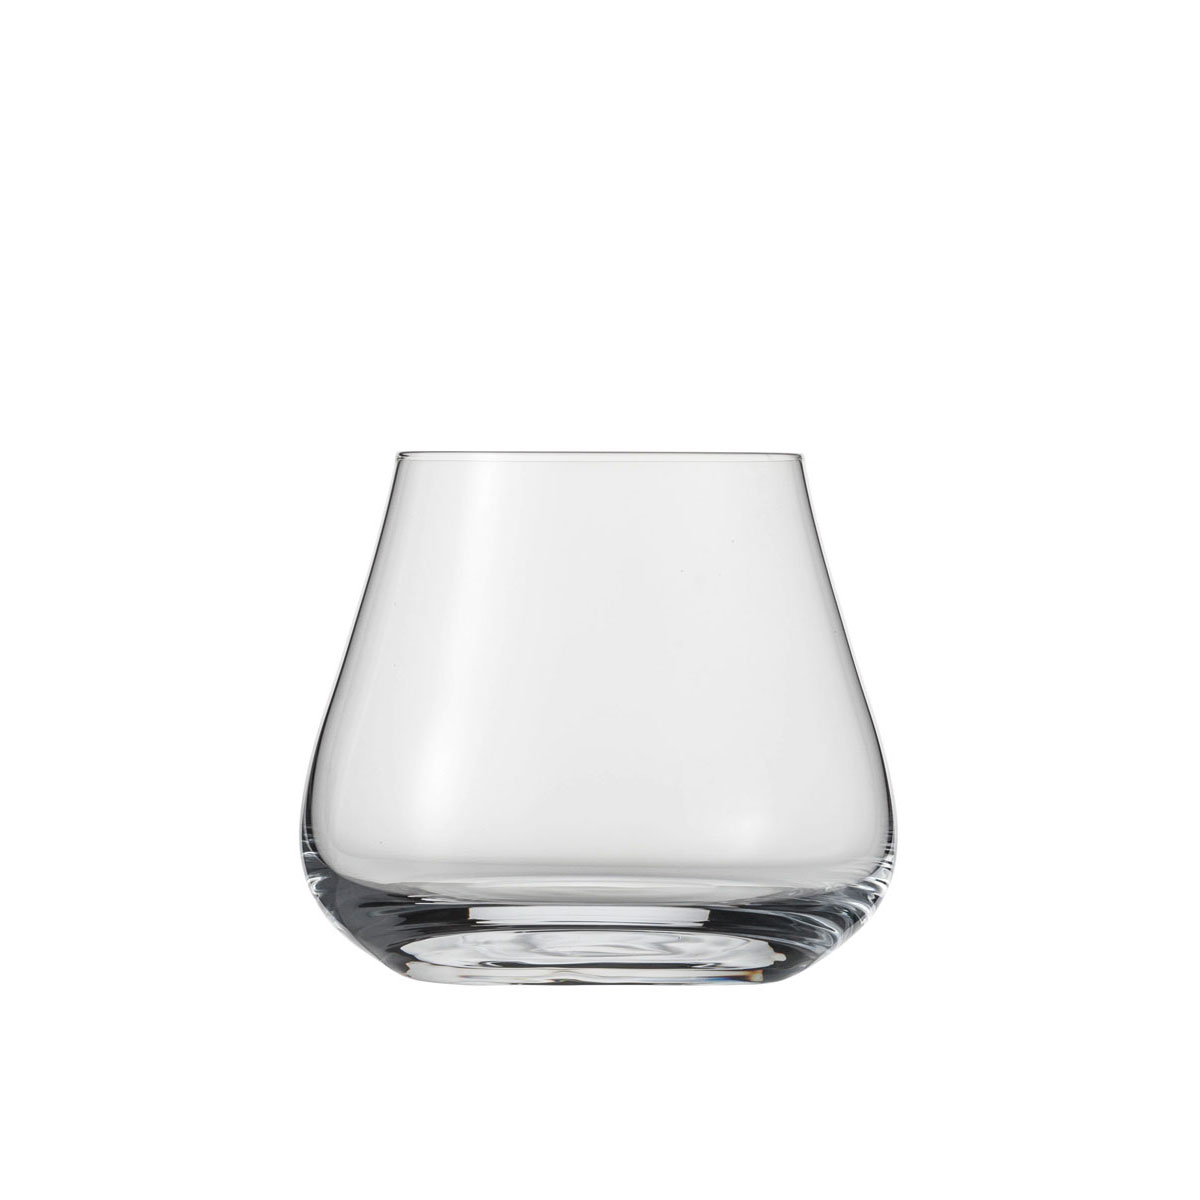 Schott Zwiesel Tritan Crystal, Air Crystal Whiskey Glass, Single